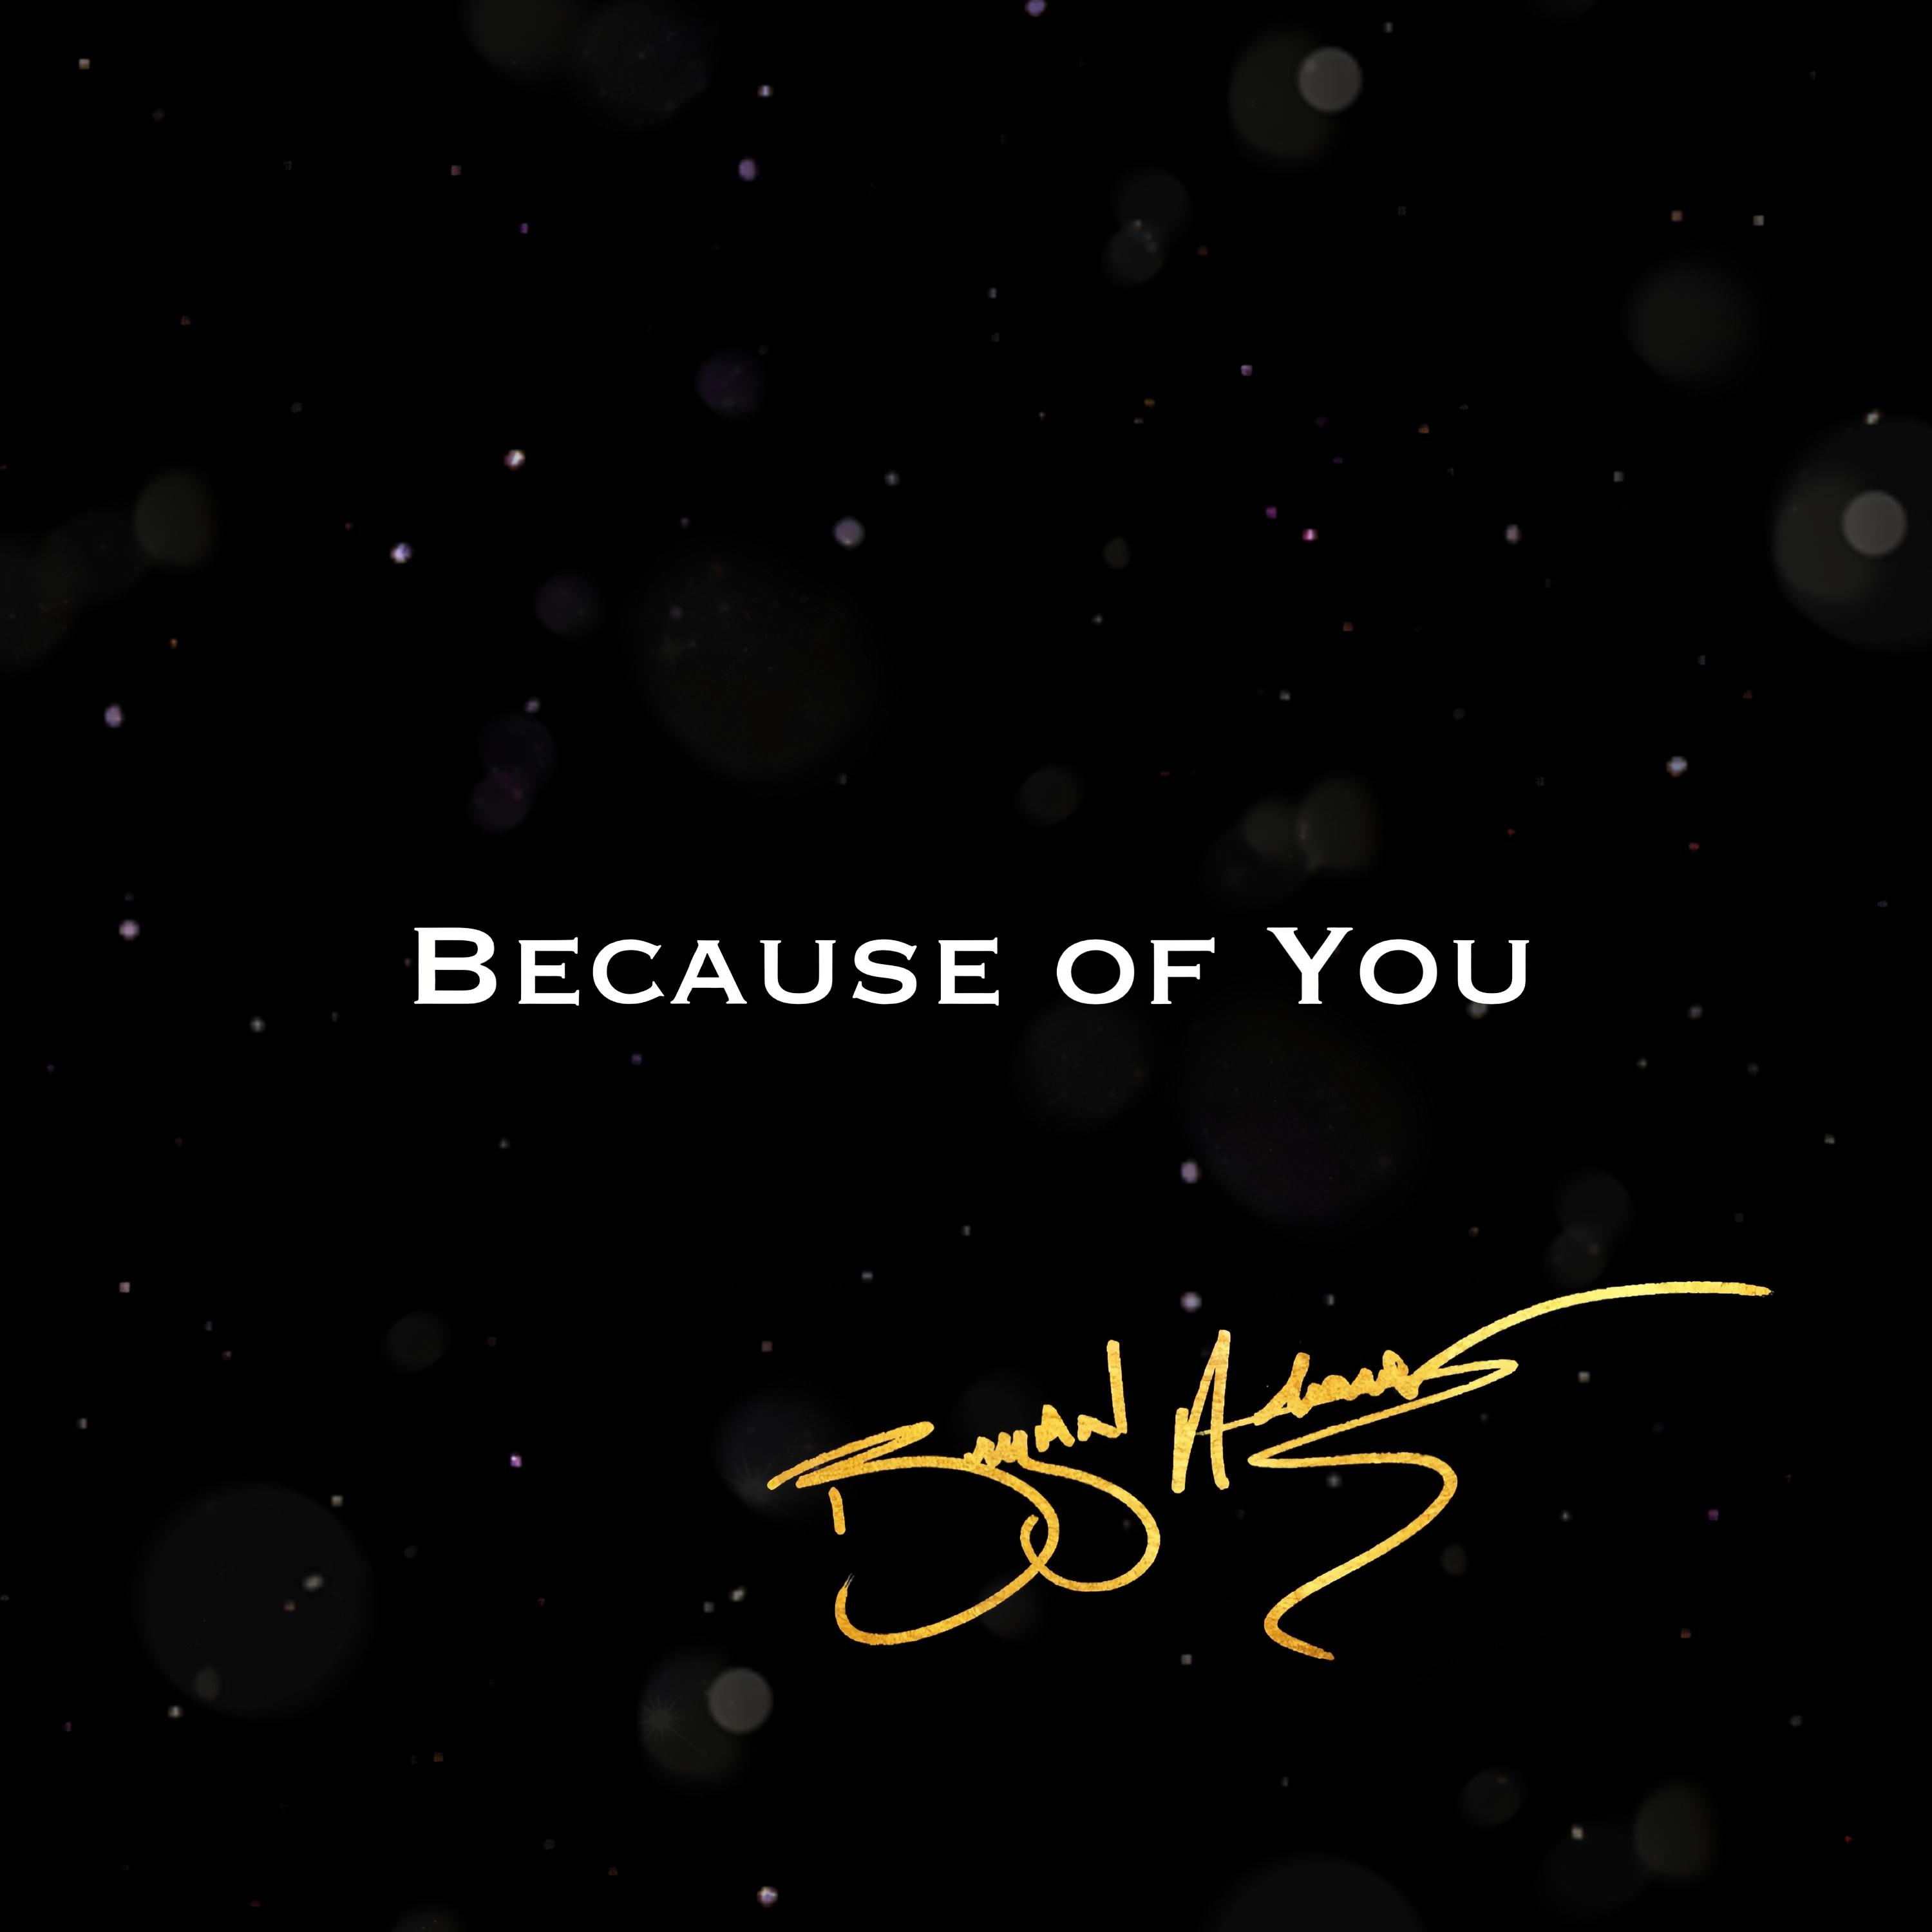 “Because of You” Single Artwork Designed by Bryan Abrams’ Daughters Kai-Lee and Kadence Abrams